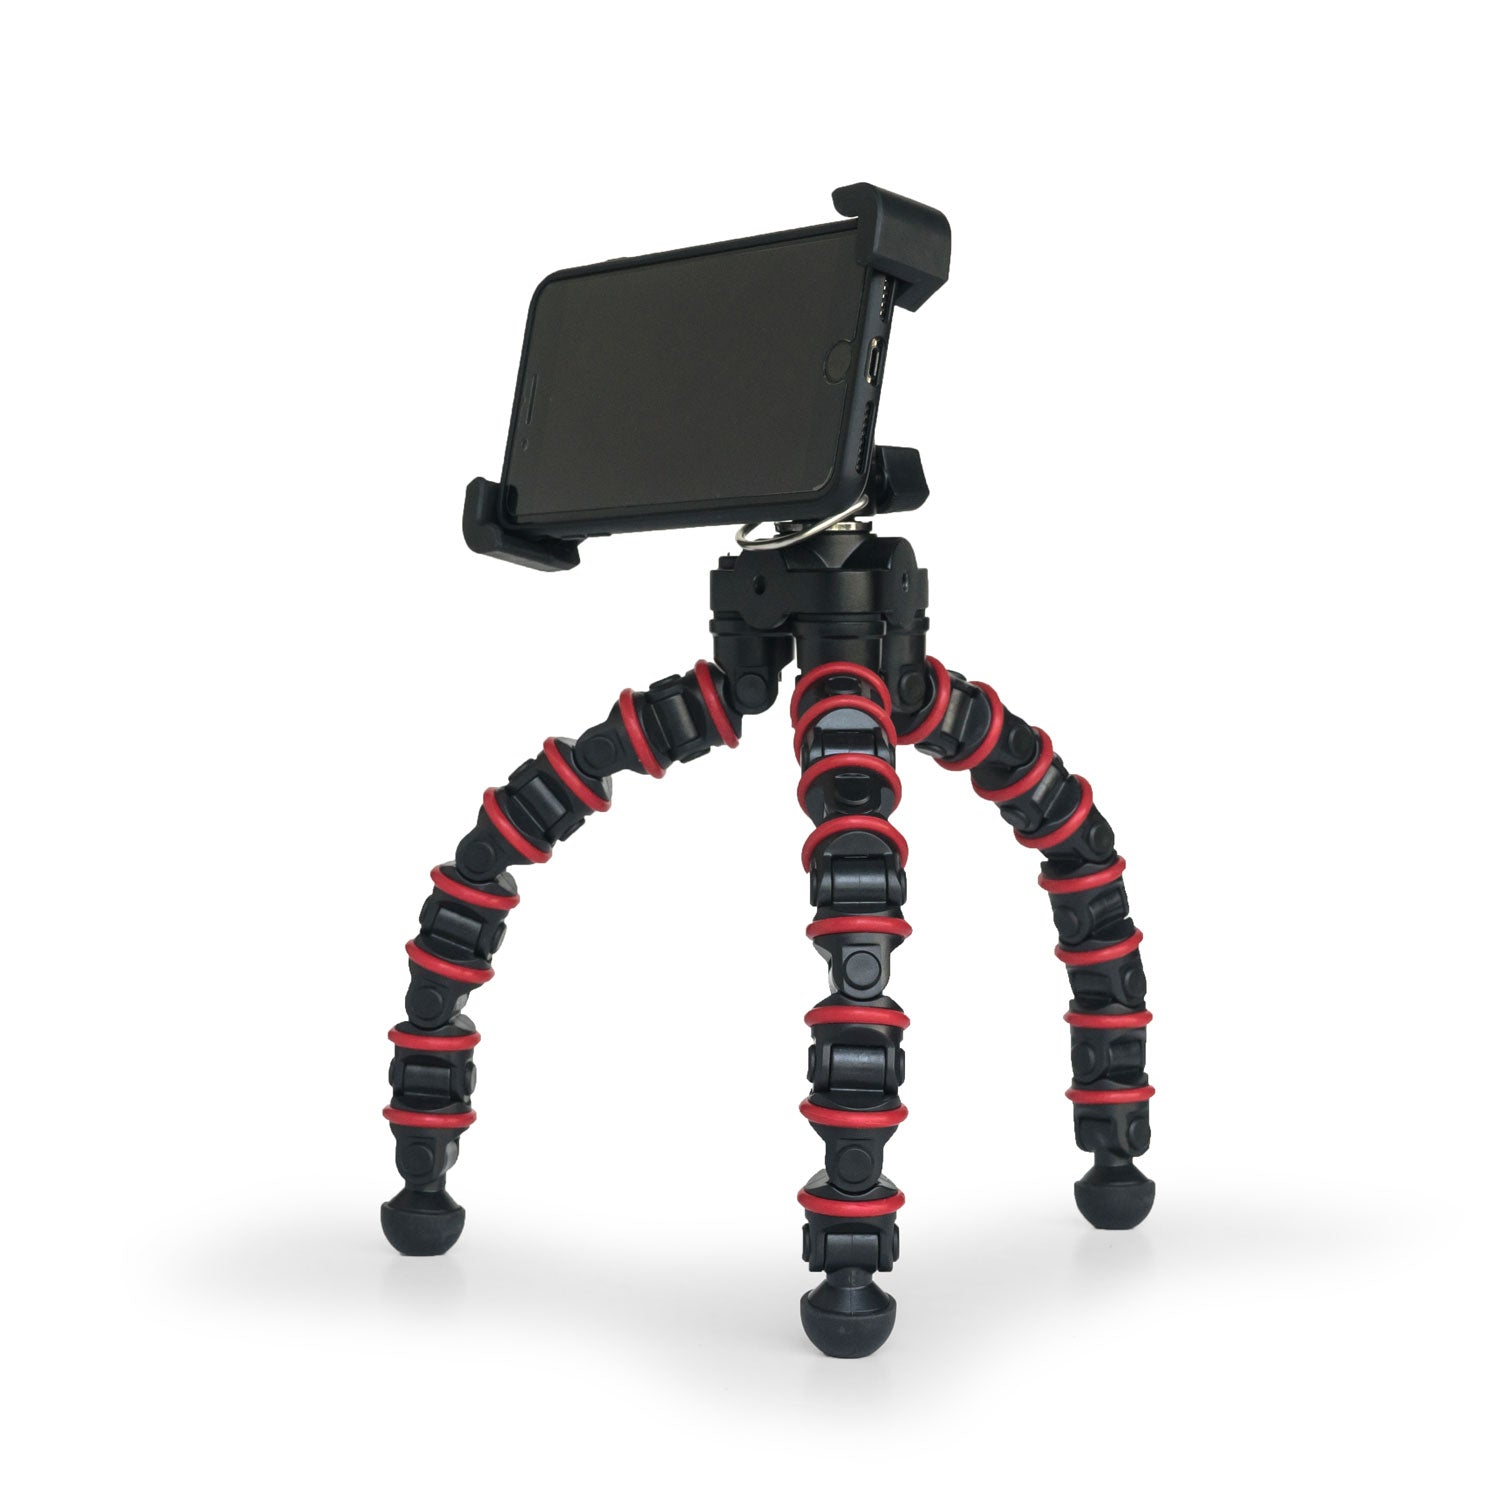 Grifiti Nootle Recon 9 Flexpod Flexible Camera Tripod and Universal Phone Mount - Grifiti